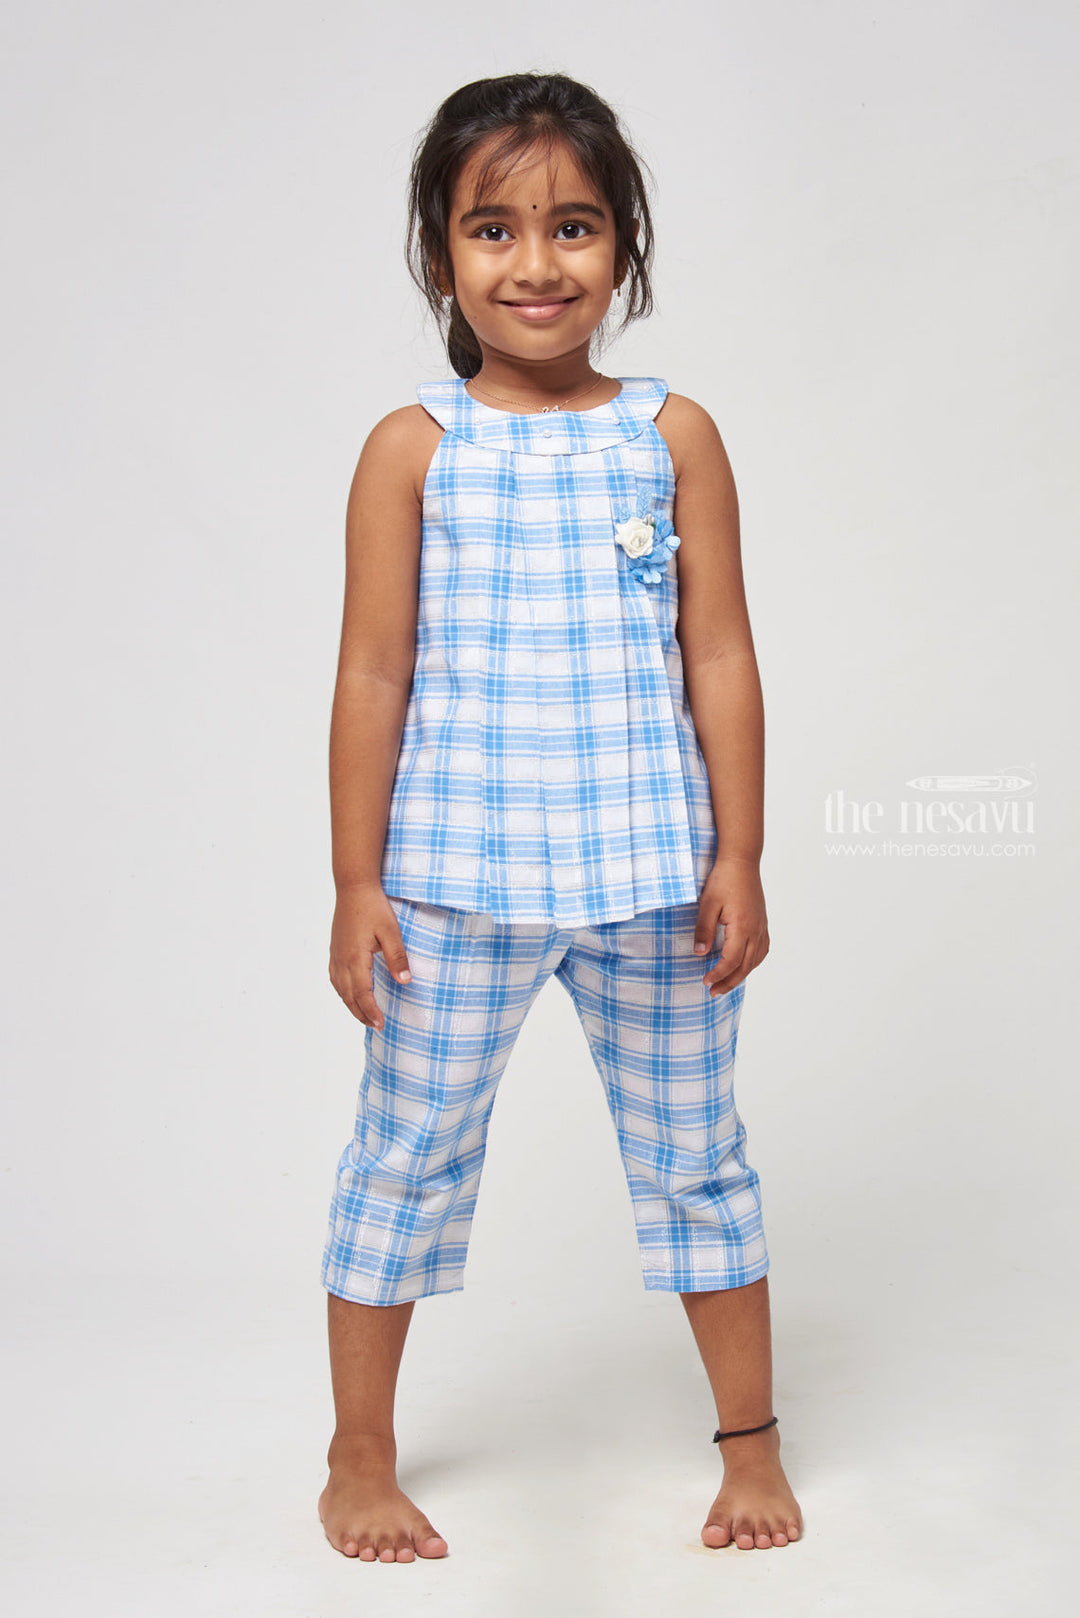 The Nesavu Baby Frock / Jhabla Blue Checkered Halter Top & Pant Set for Young Fashionistas Nesavu 18 (2Y) / Blue BFJ433A-18 Trendy baby frock designs | Baby Frocks Casuals | The Nesavu